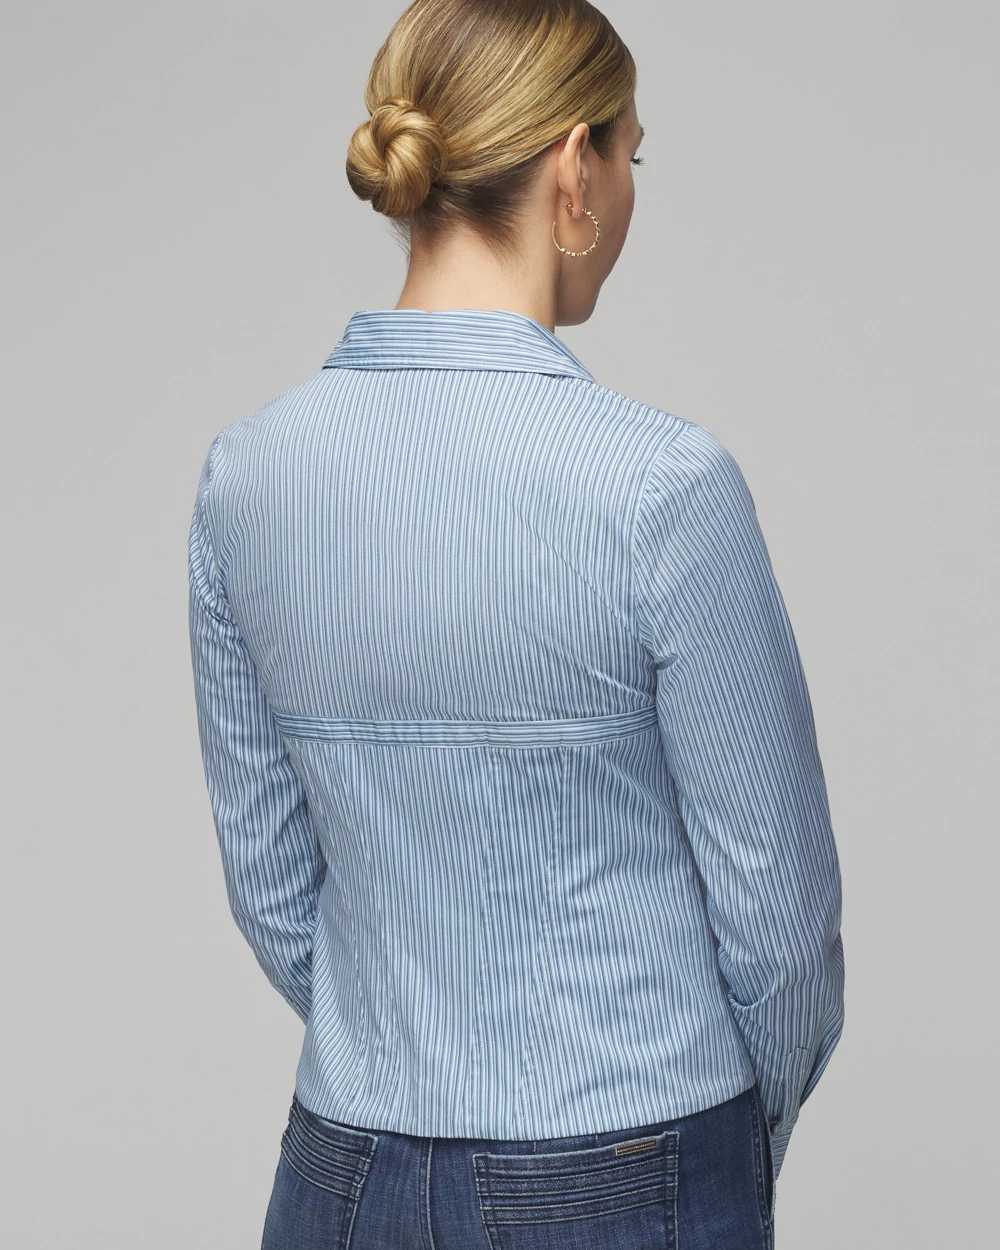 Long Sleeve Corset Poplin Shirt click to view larger image.